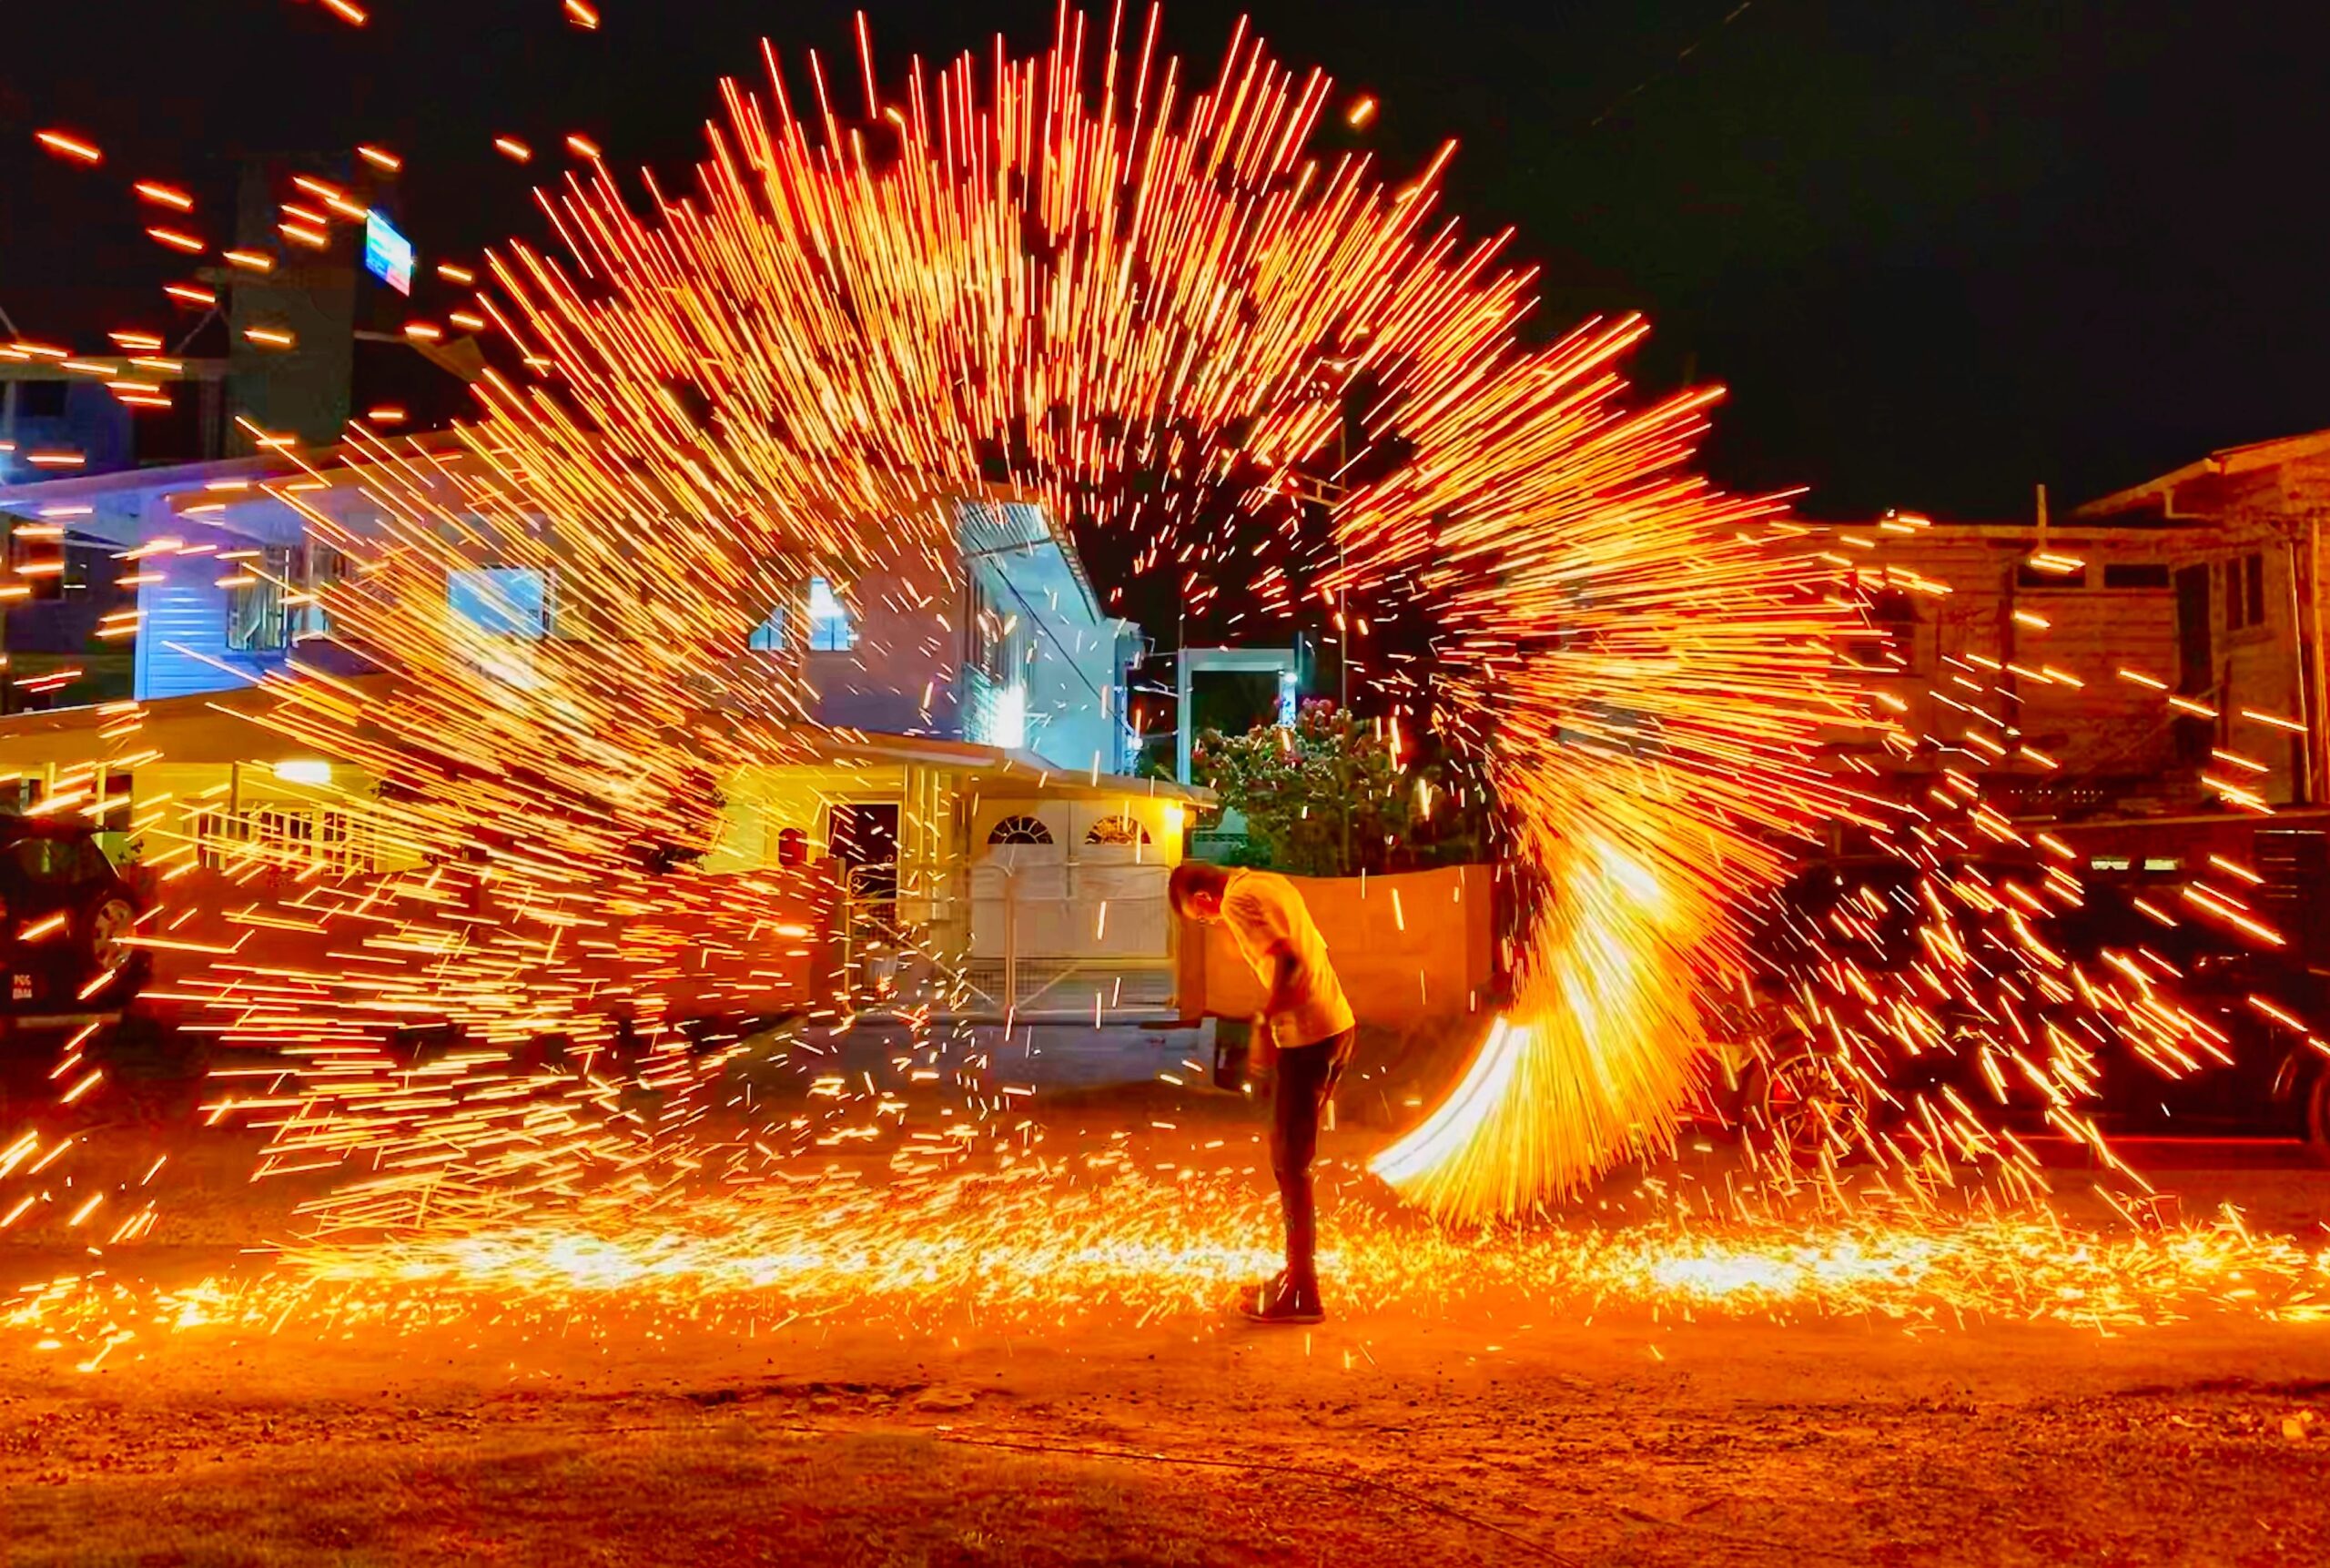 Spinning steel wool, Diwali celebration, Guyana